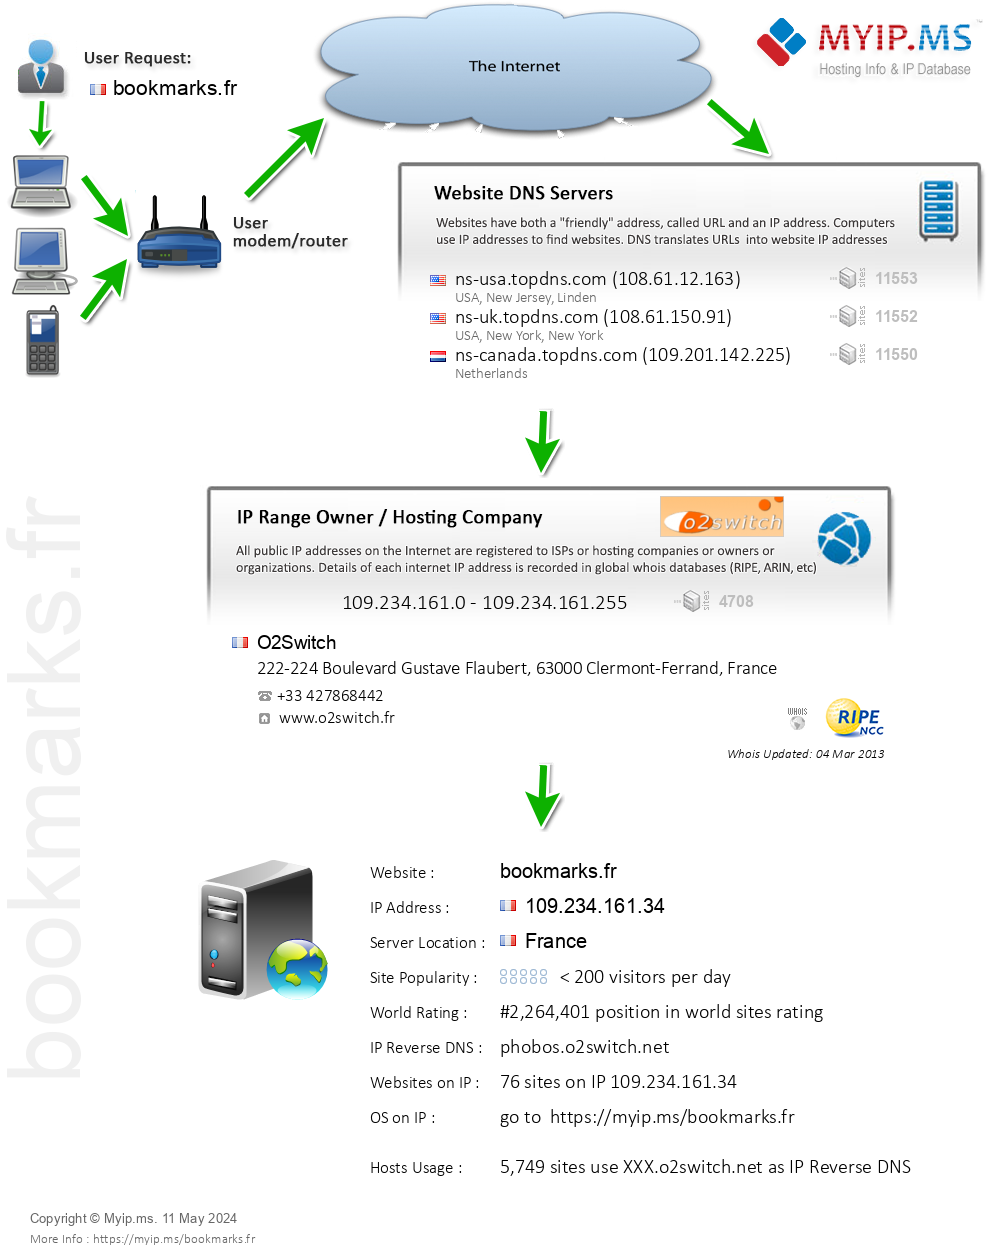 Bookmarks.fr - Website Hosting Visual IP Diagram